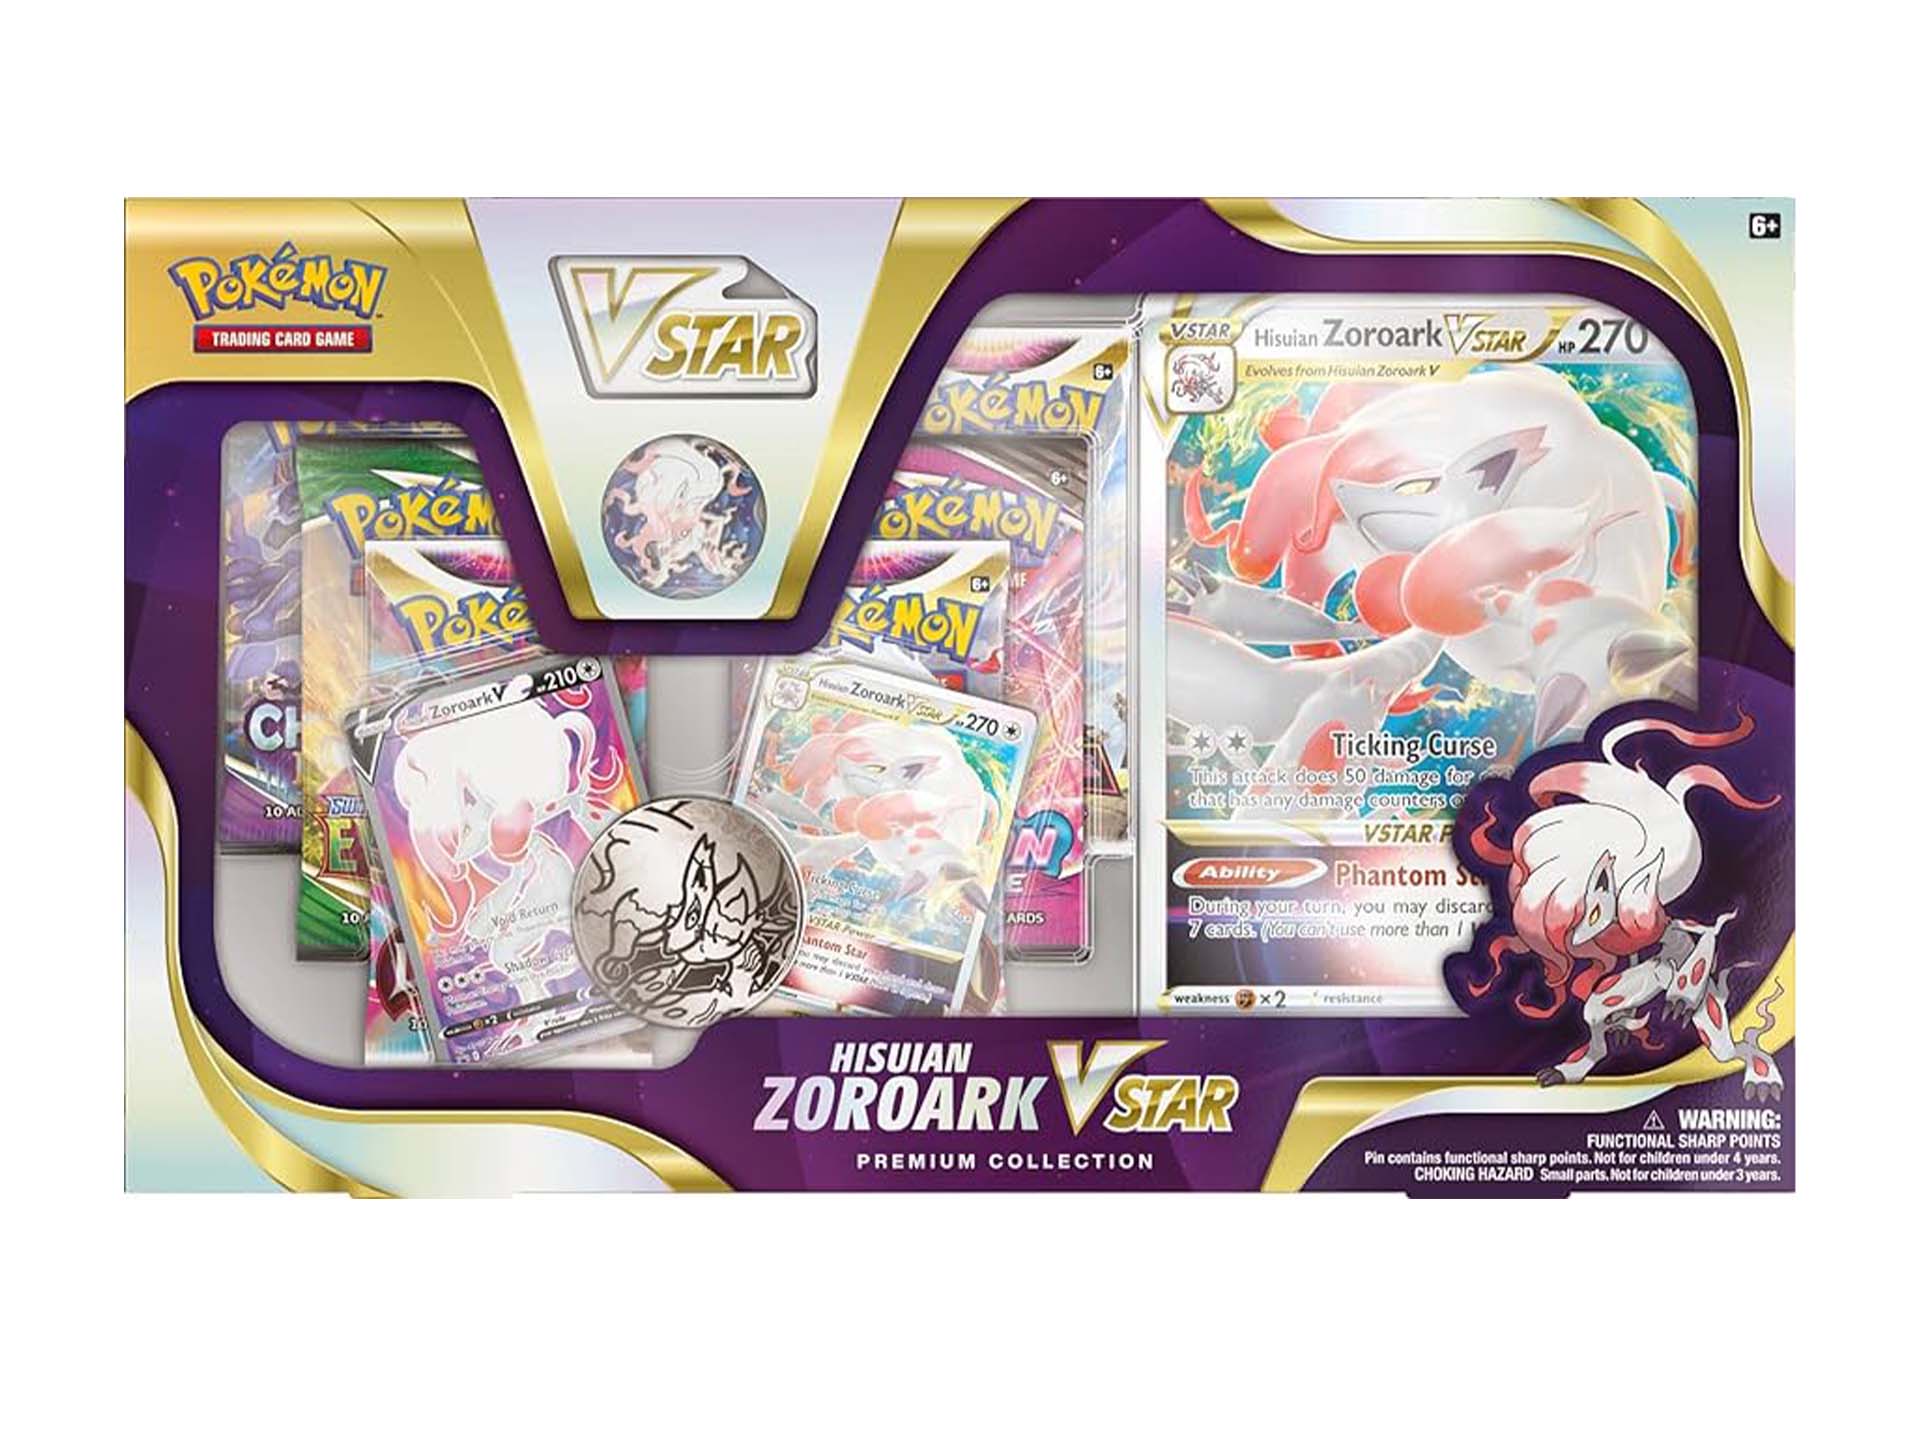 Pokémon Hisuian Zoroark Vstar Premium Collection